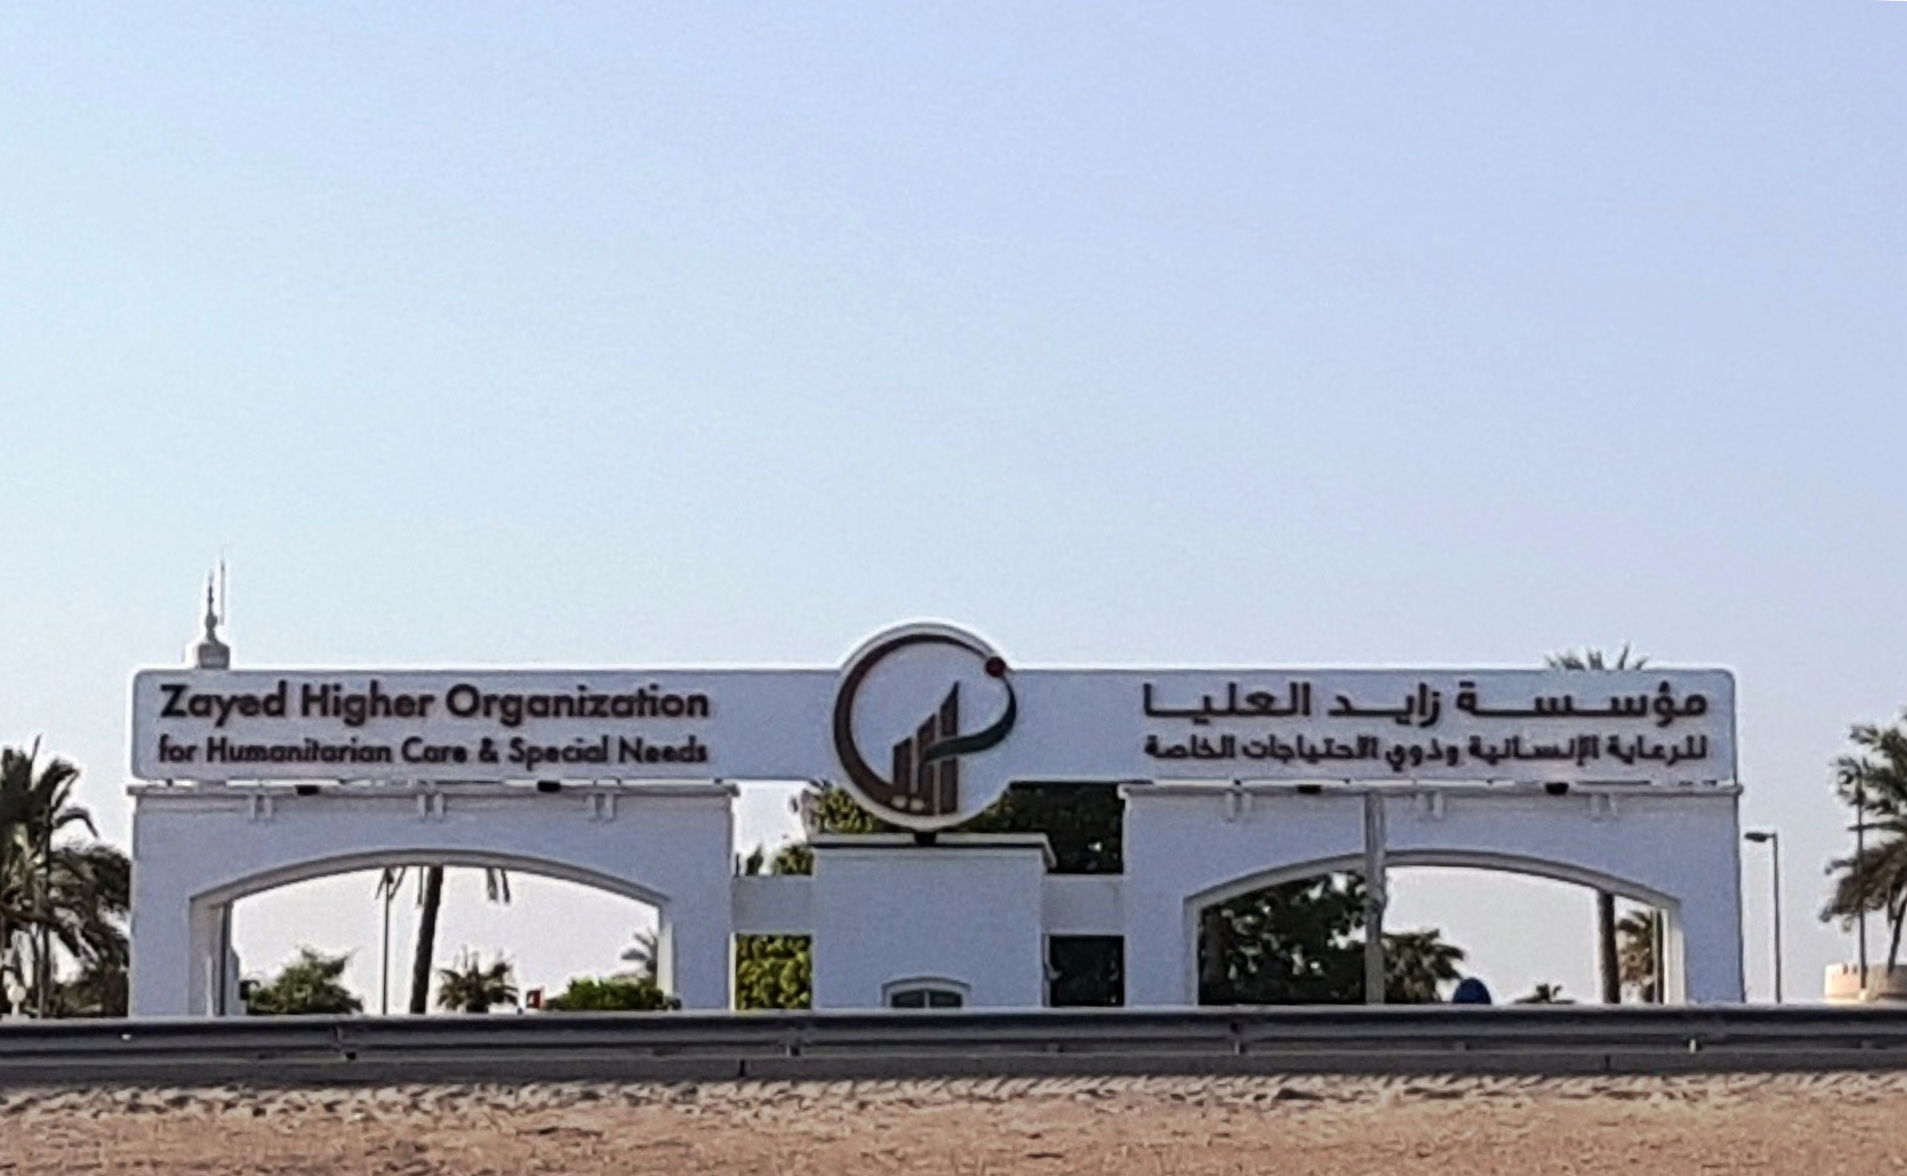  Zayed Higher Organization